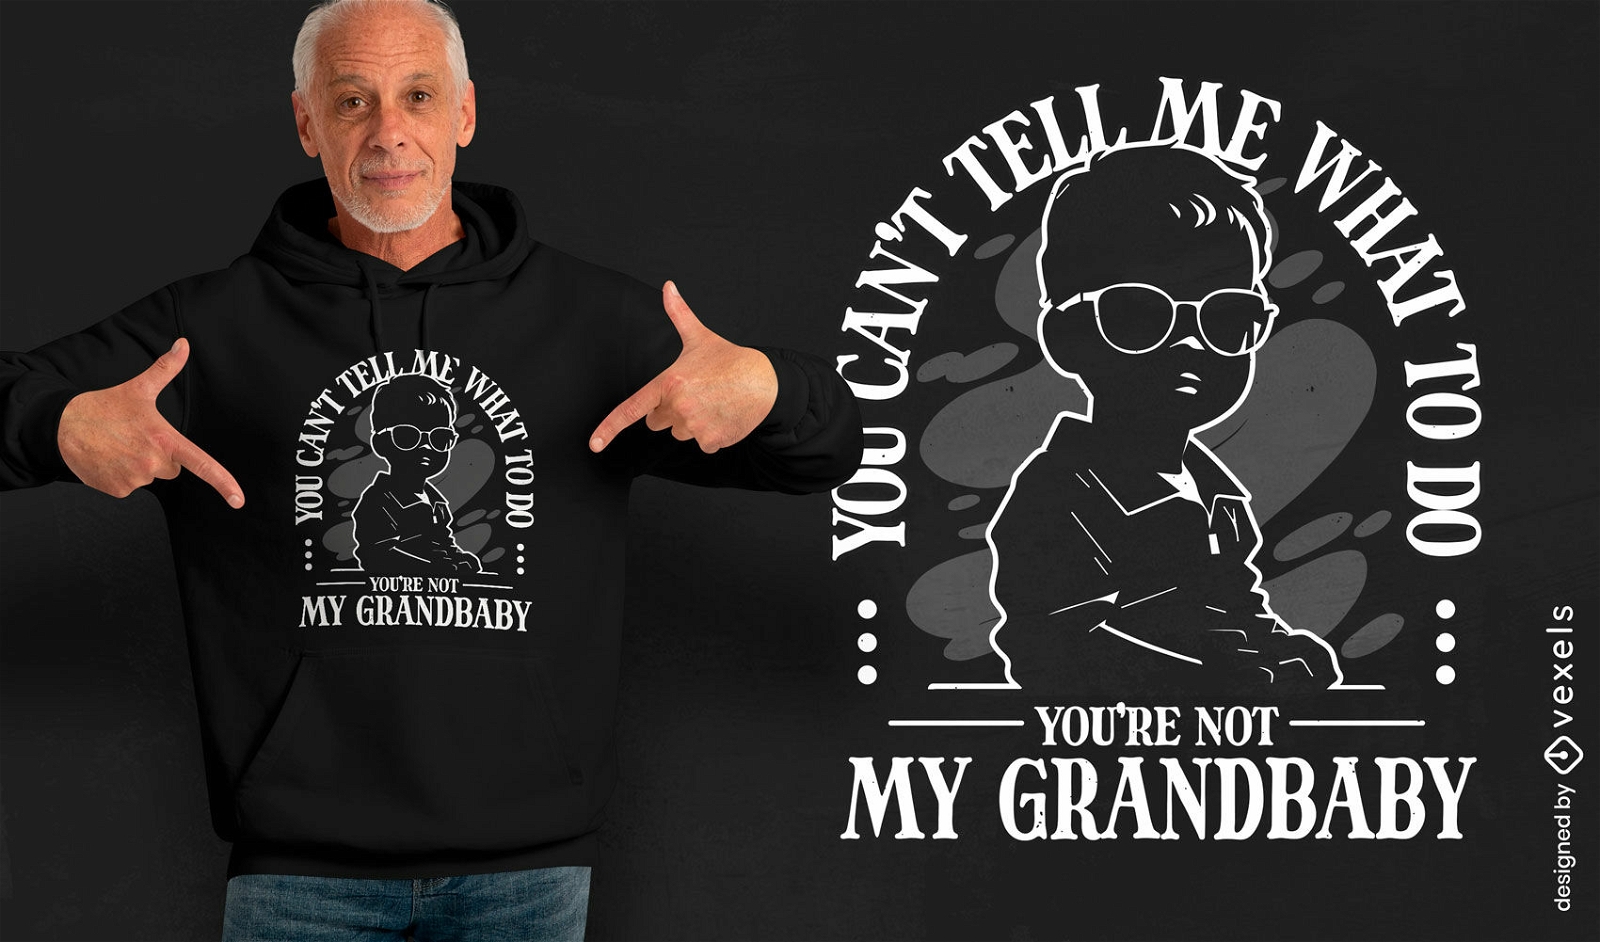 Grandbaby quote t-shirt design